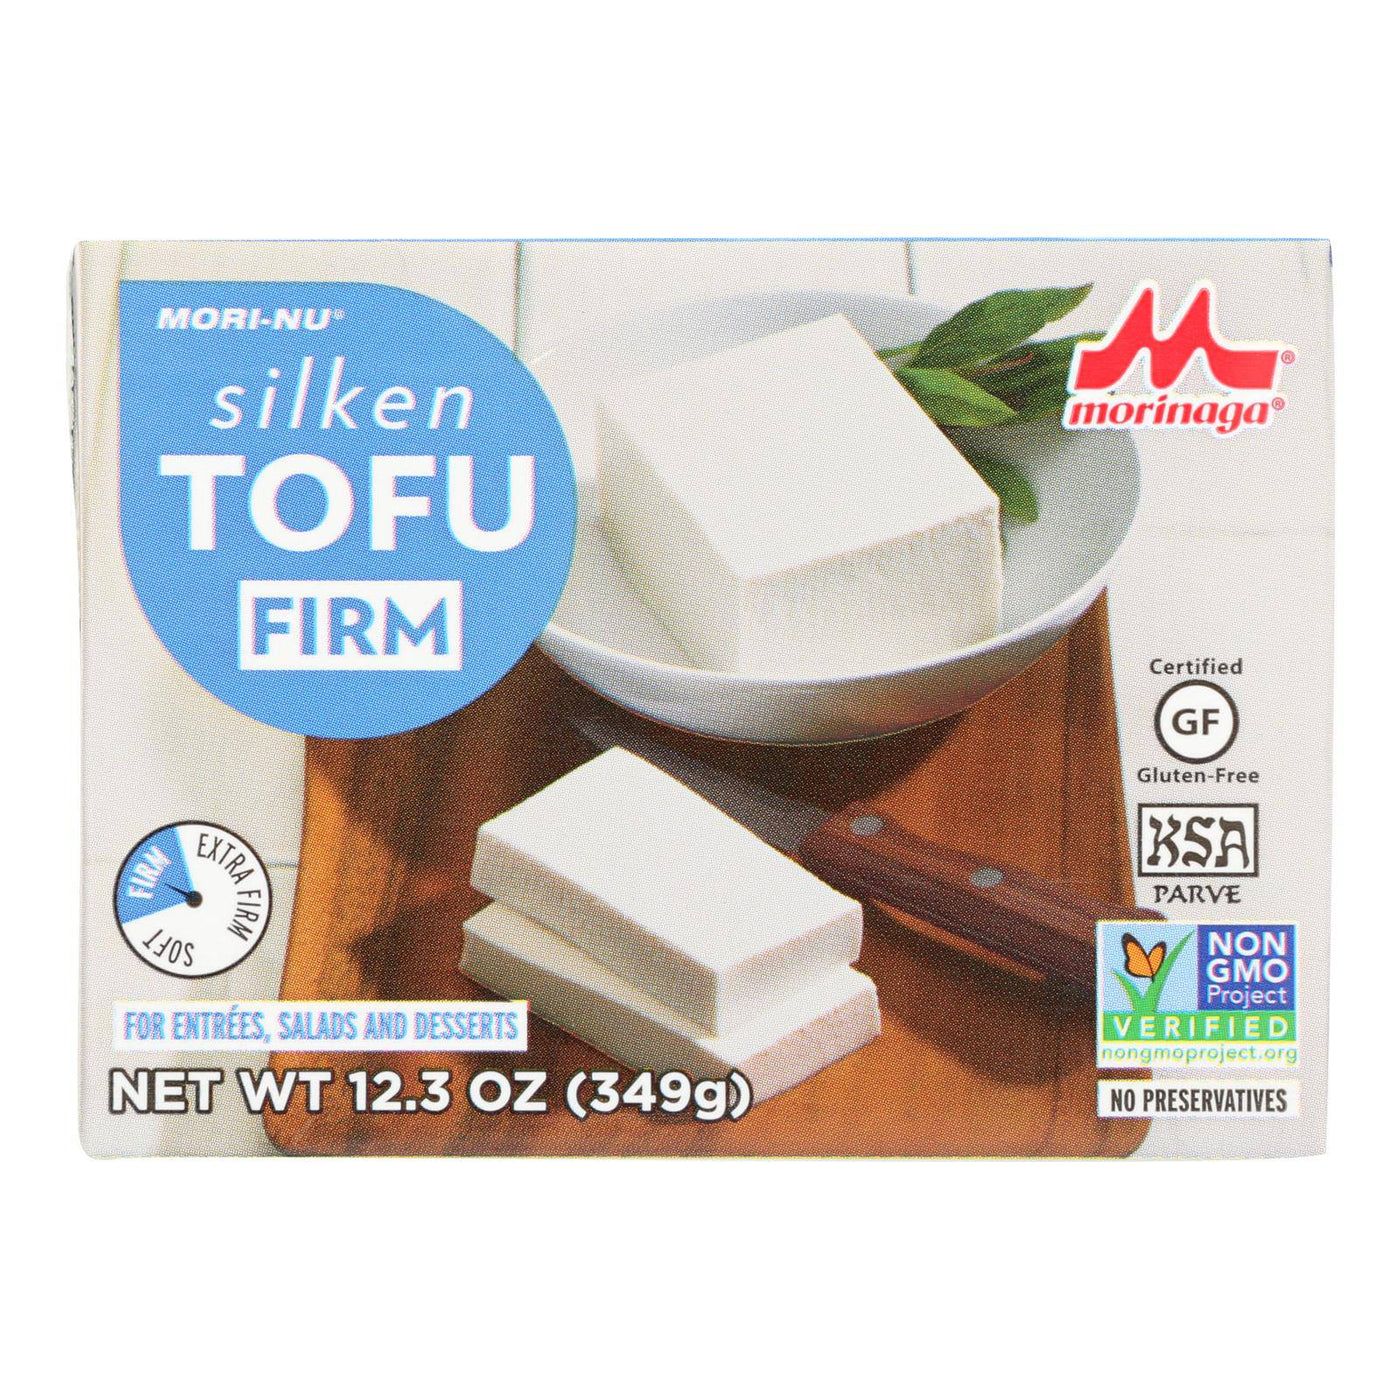 Mori-nu Silken Tofu - Firm - Case Of 12 - 12.3 Oz. | OnlyNaturals.us